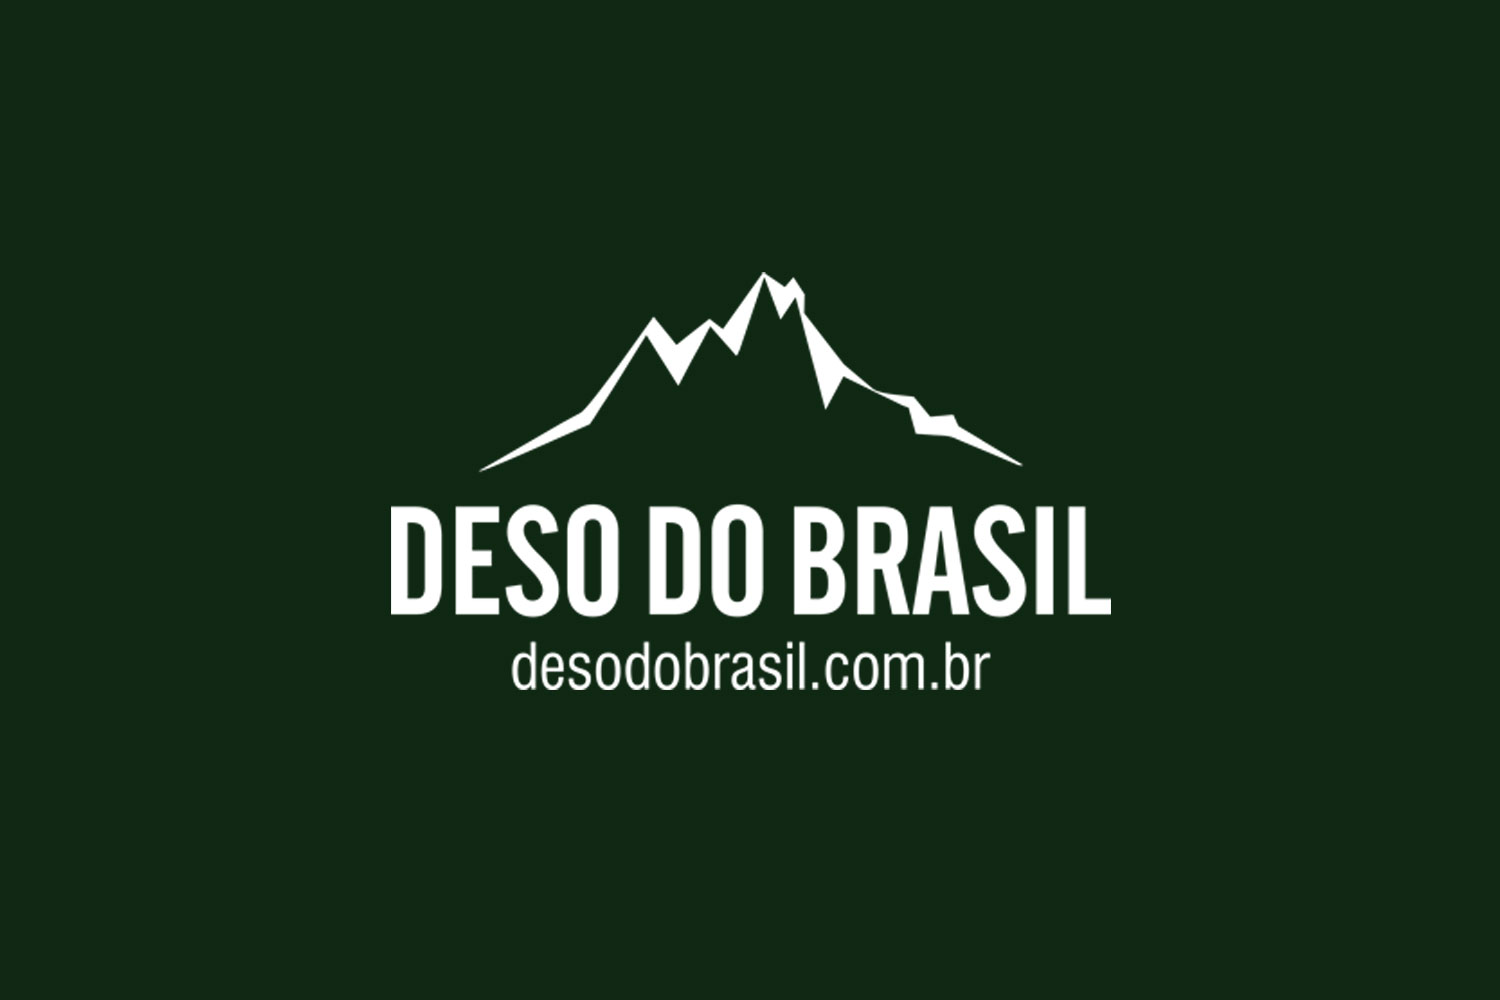 logos_clientes_site_deso-do-brasil